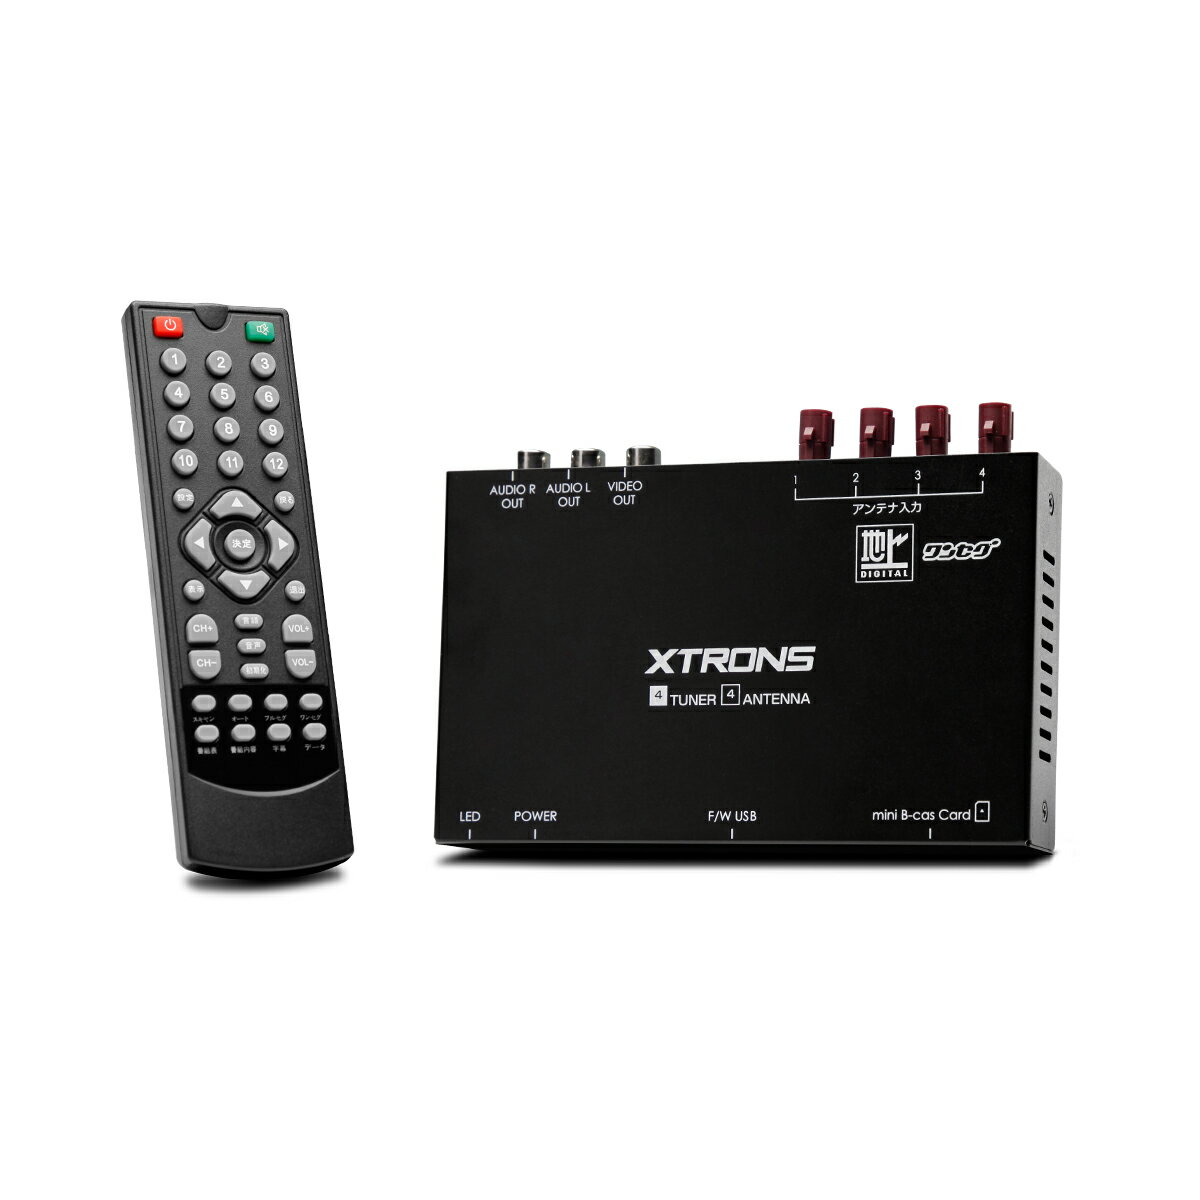 （JT2HD）XTRONS 地デジチューナ 全方位高感度 車載用 1920x1080解像度 4x4 フルセグ ワンセグ HDMI出力対応 カーナビと連動可能 miniB-CASカード付き フィルムアンテナ 1年保証